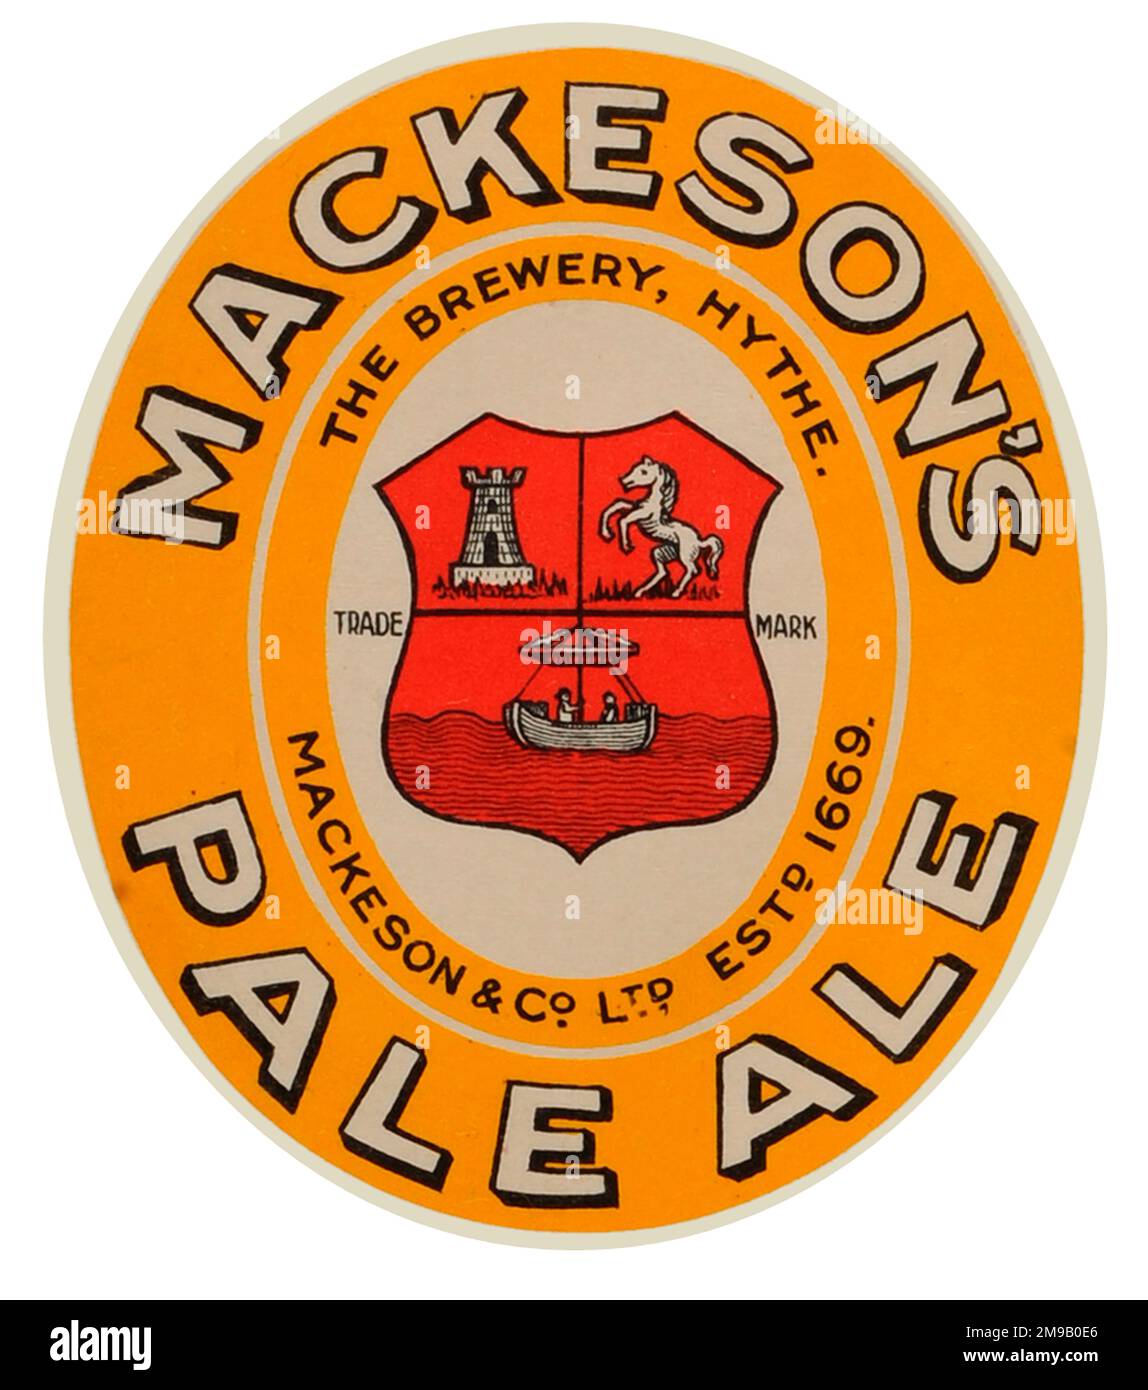 Mackeson's Pale Ale Stock Photo